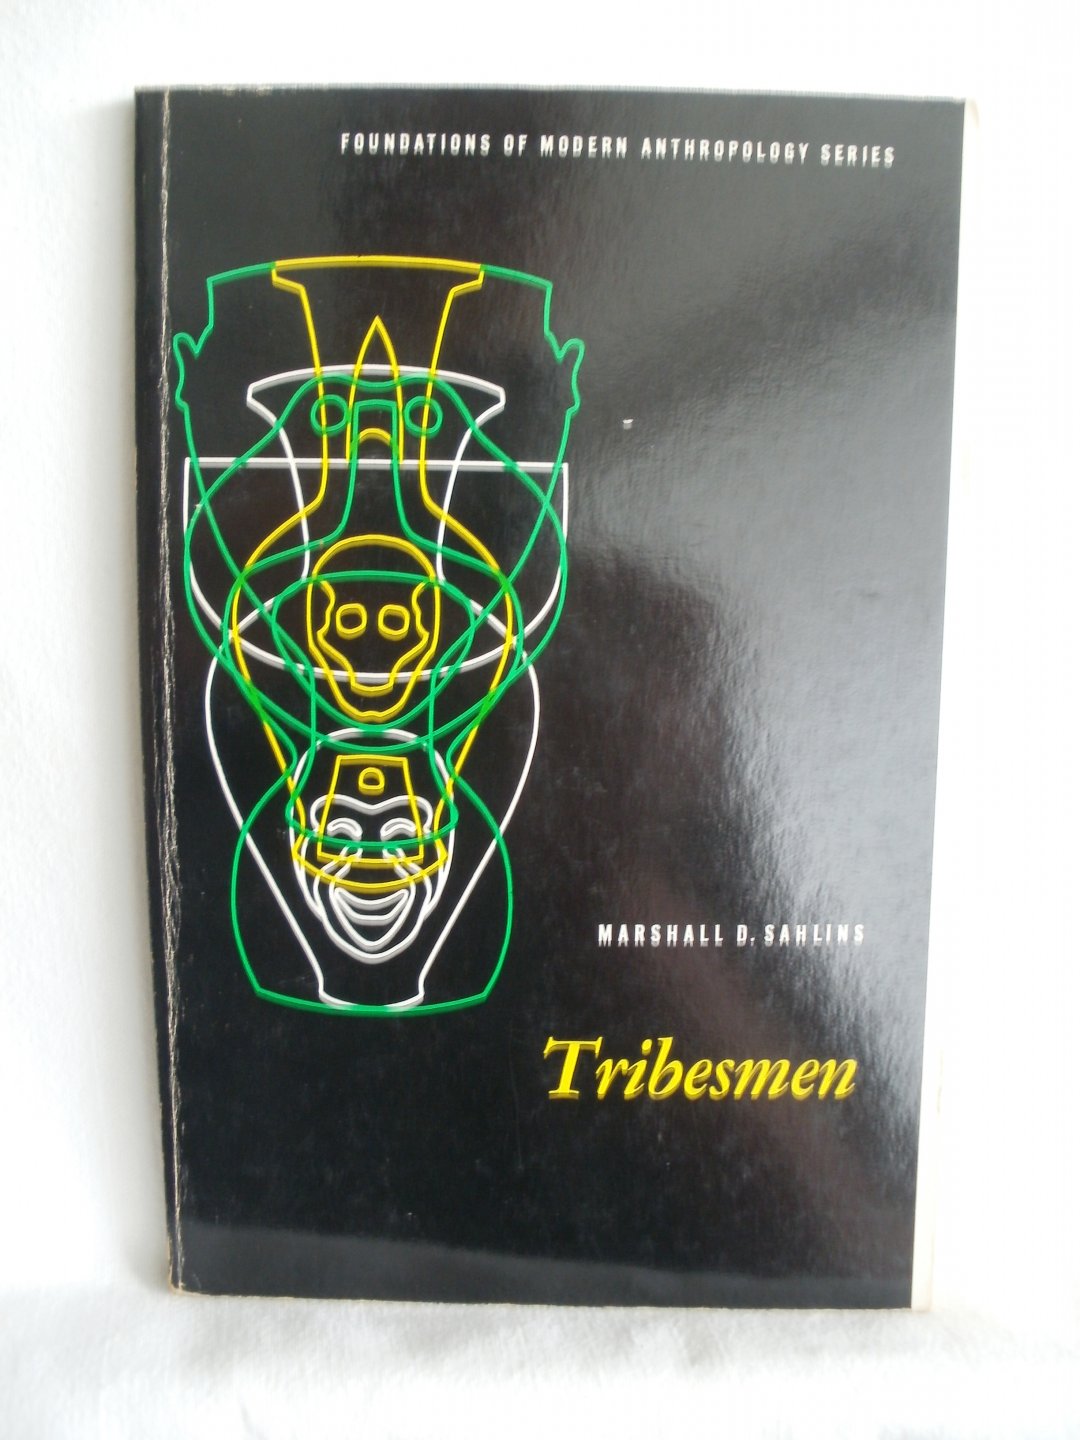 Sahlins, Marshall D. - Tribesmen. Foundations of Modern Anthropology Series.